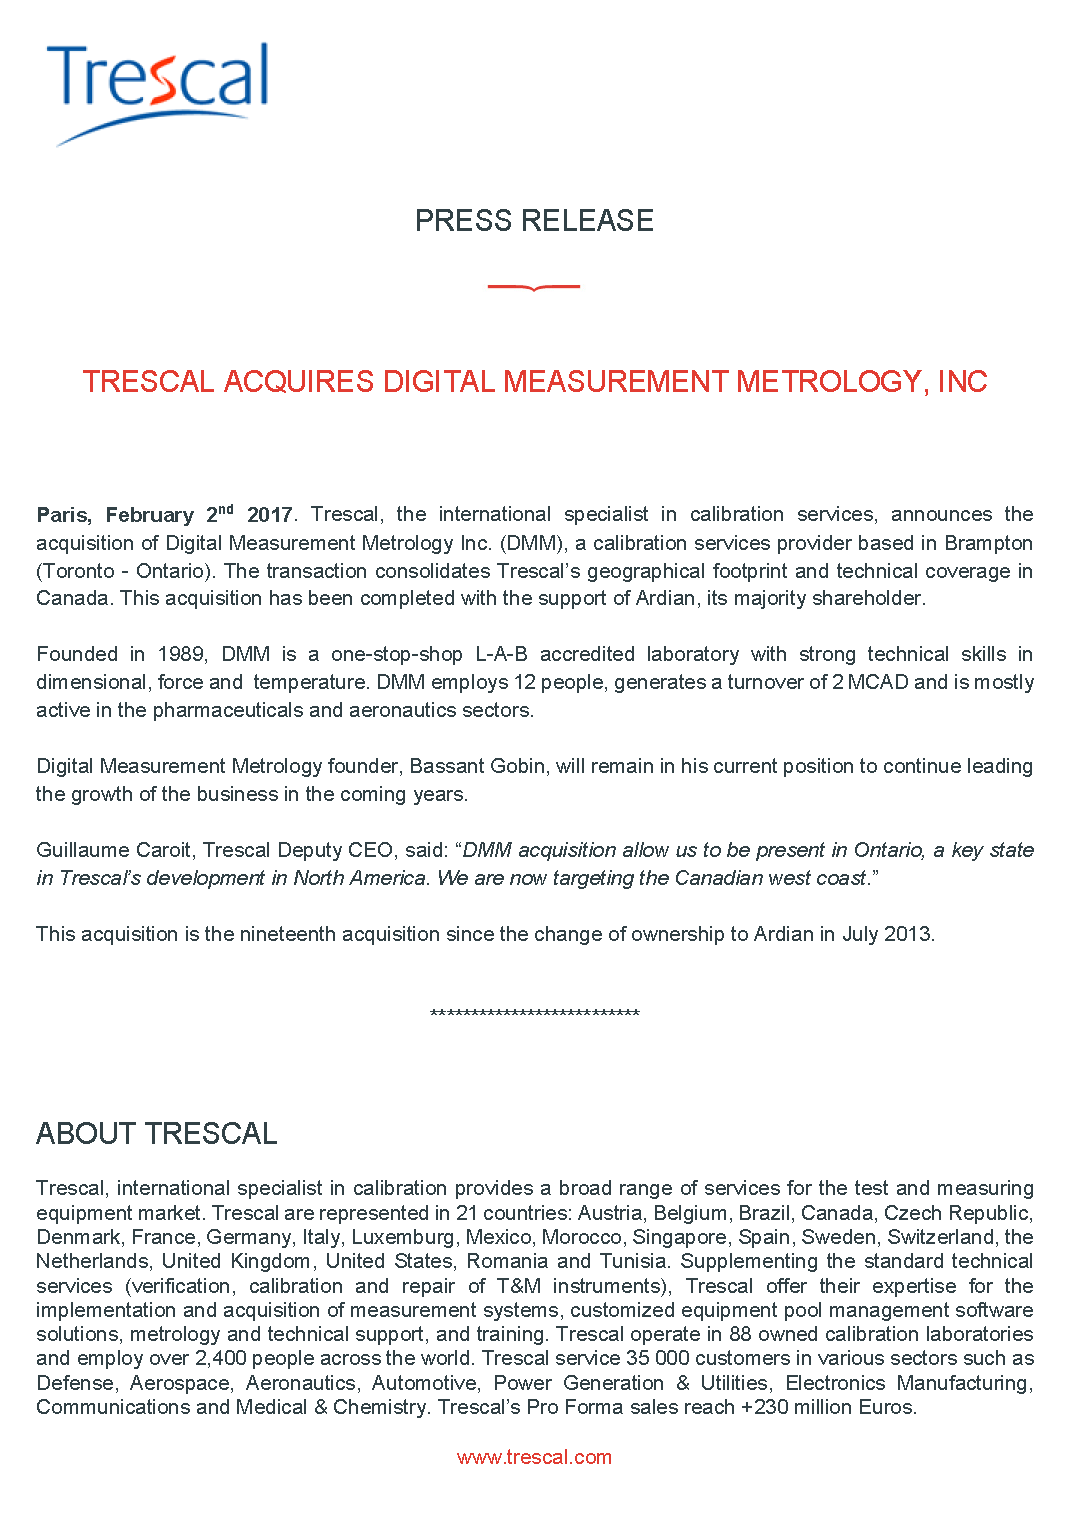 Trescal Acquires Digital Measurement Metrology, Inc (Toronto, Canada)